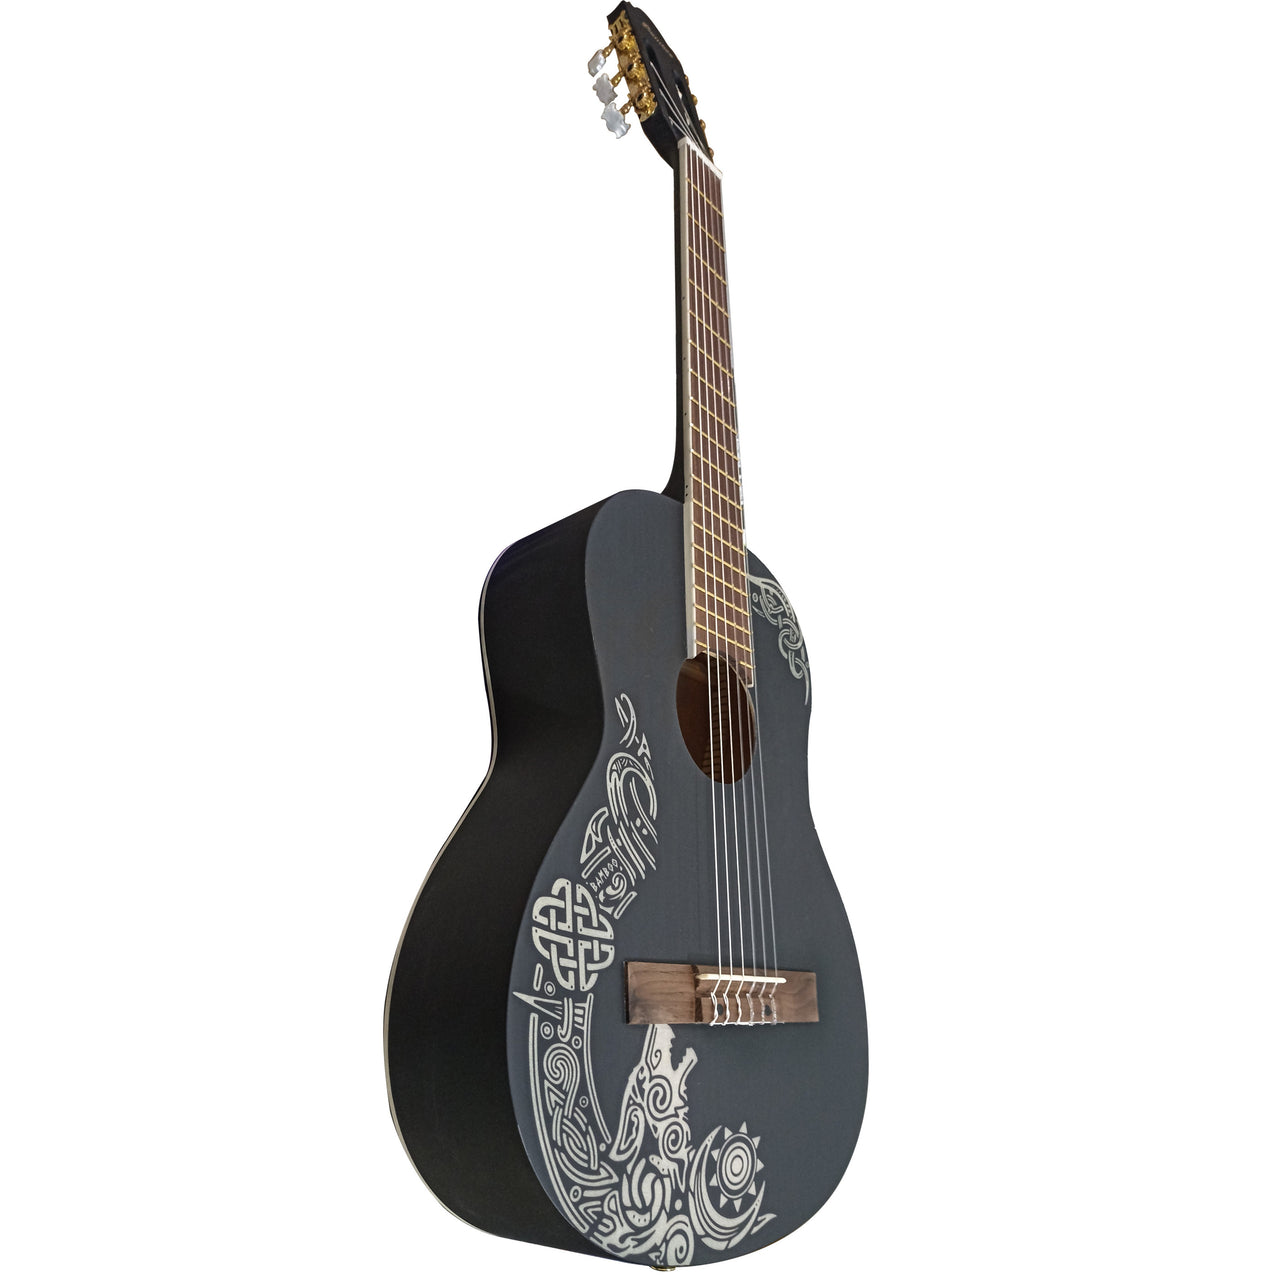 Guitarra Clasica Bamboo Gc-36-nordicwolf Con Funda 36 Pulgadas